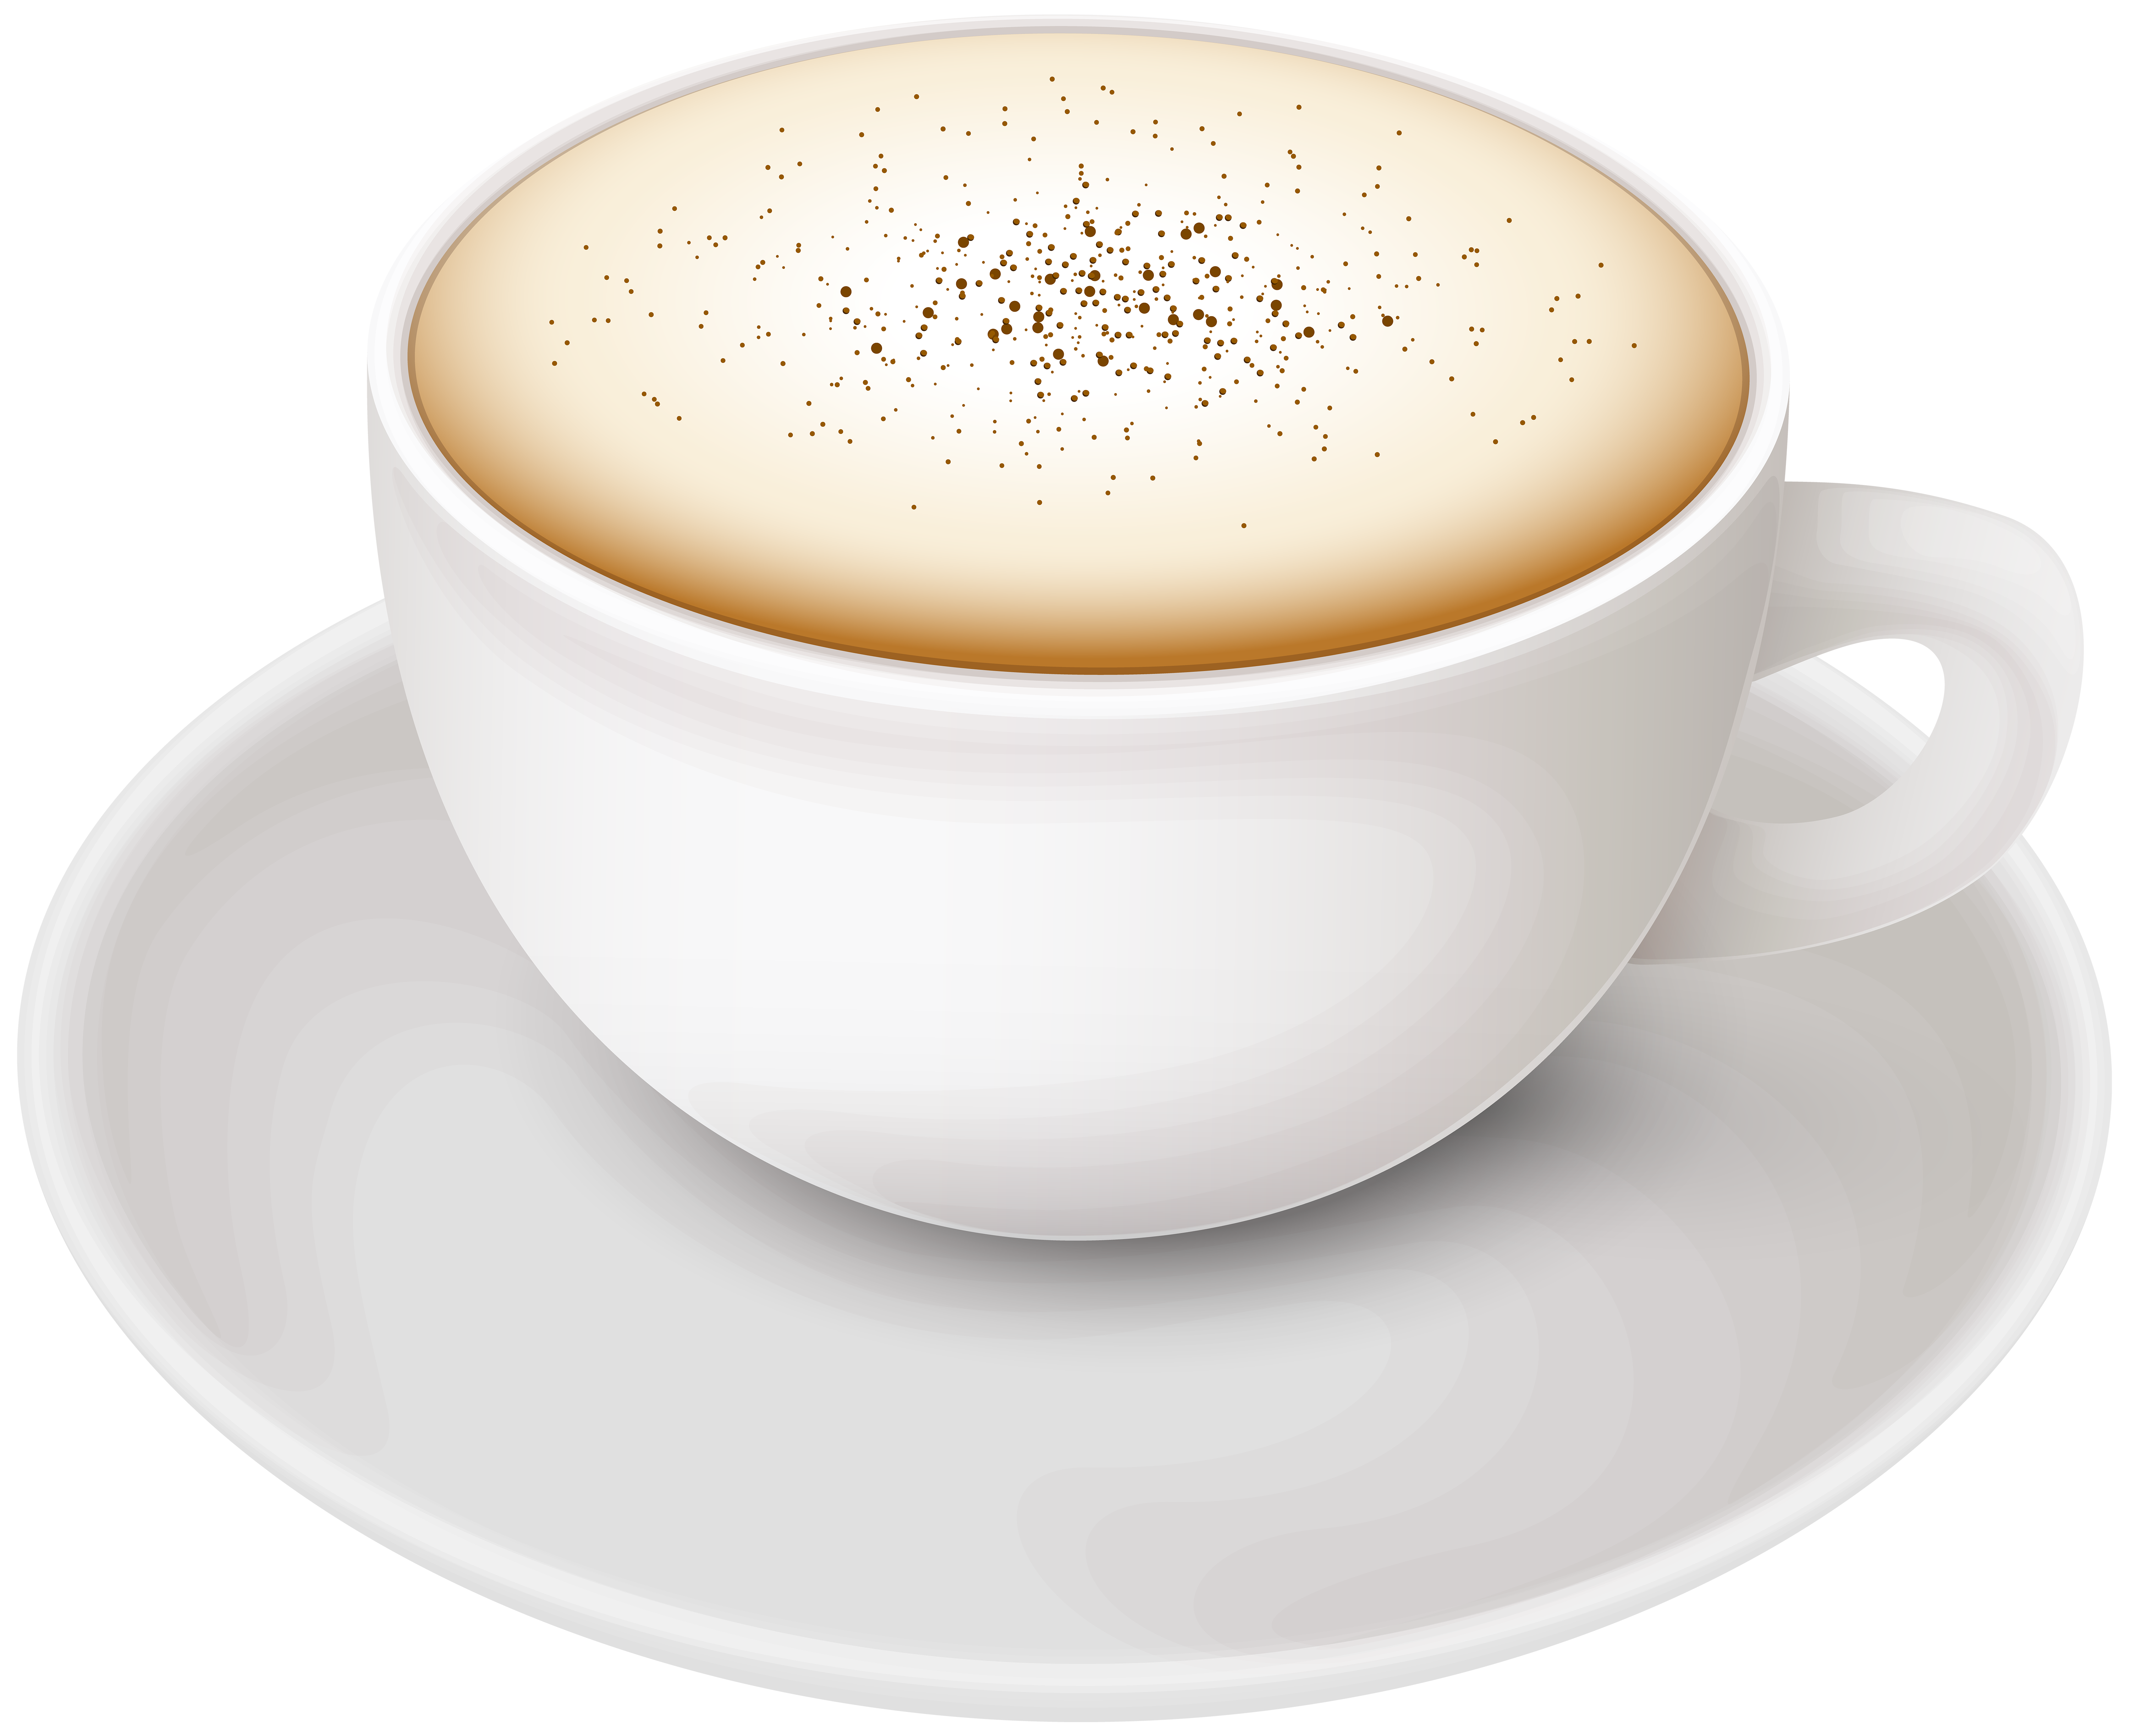 latte clipart coffee milk